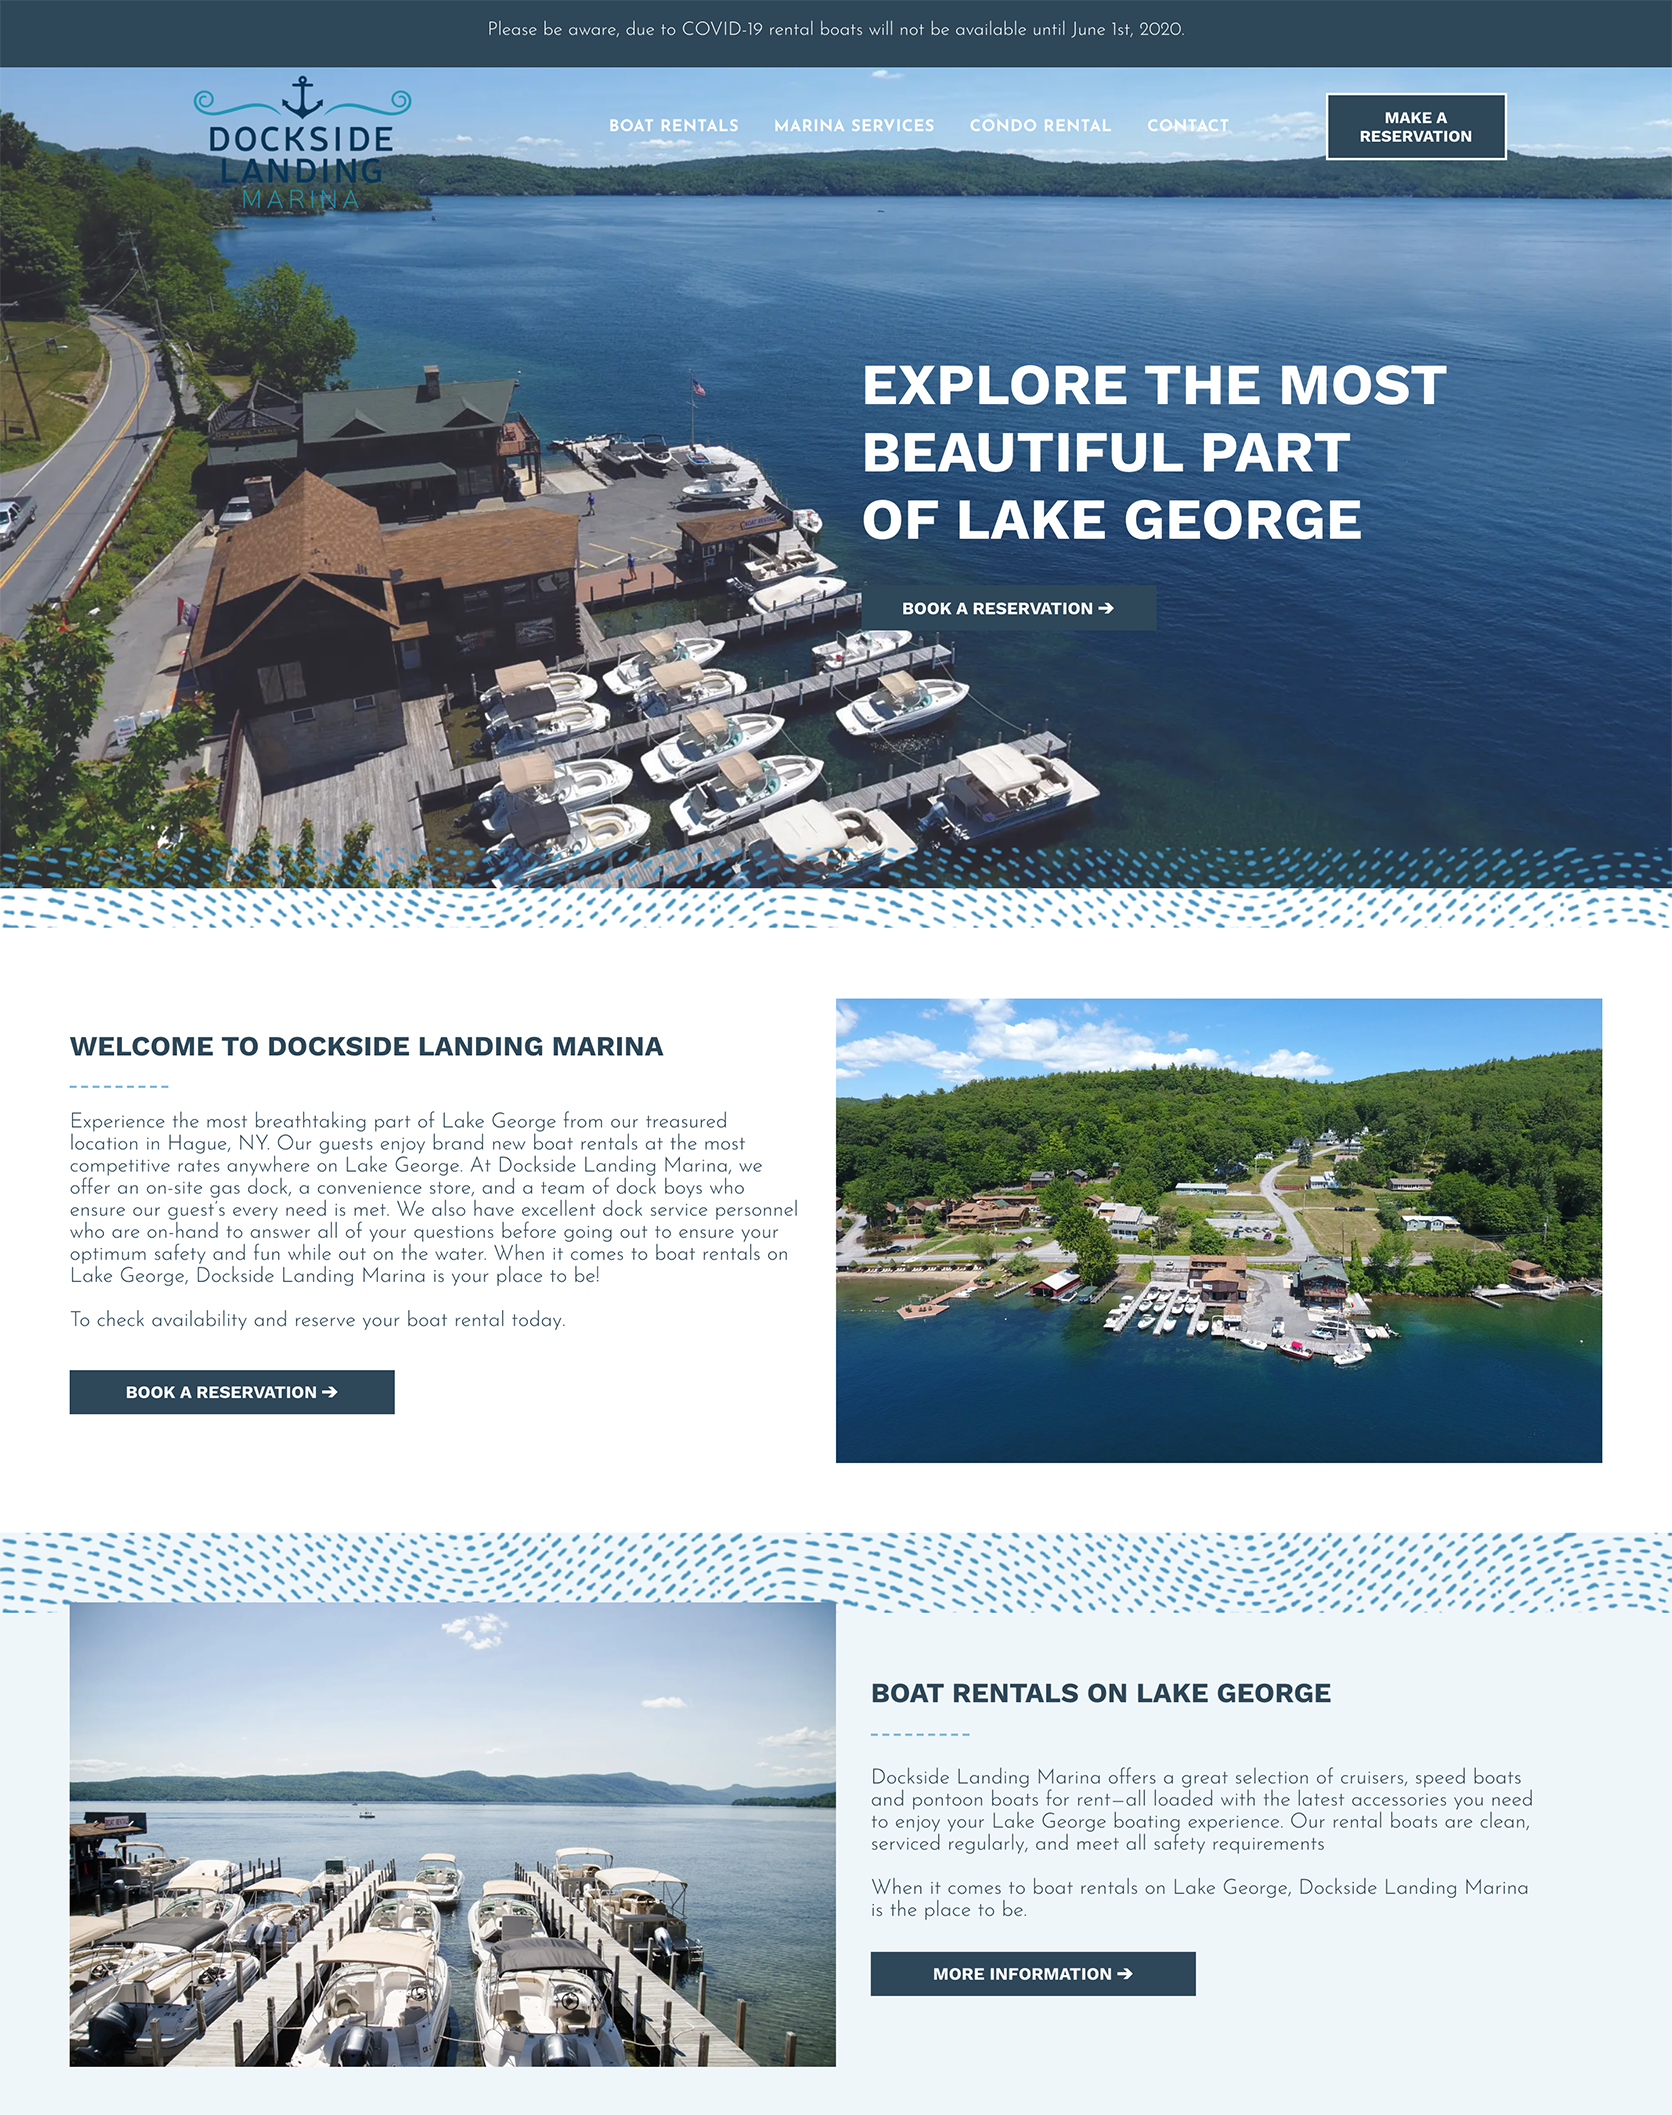 dockside-landing-marina-website-design-normandin-marketing